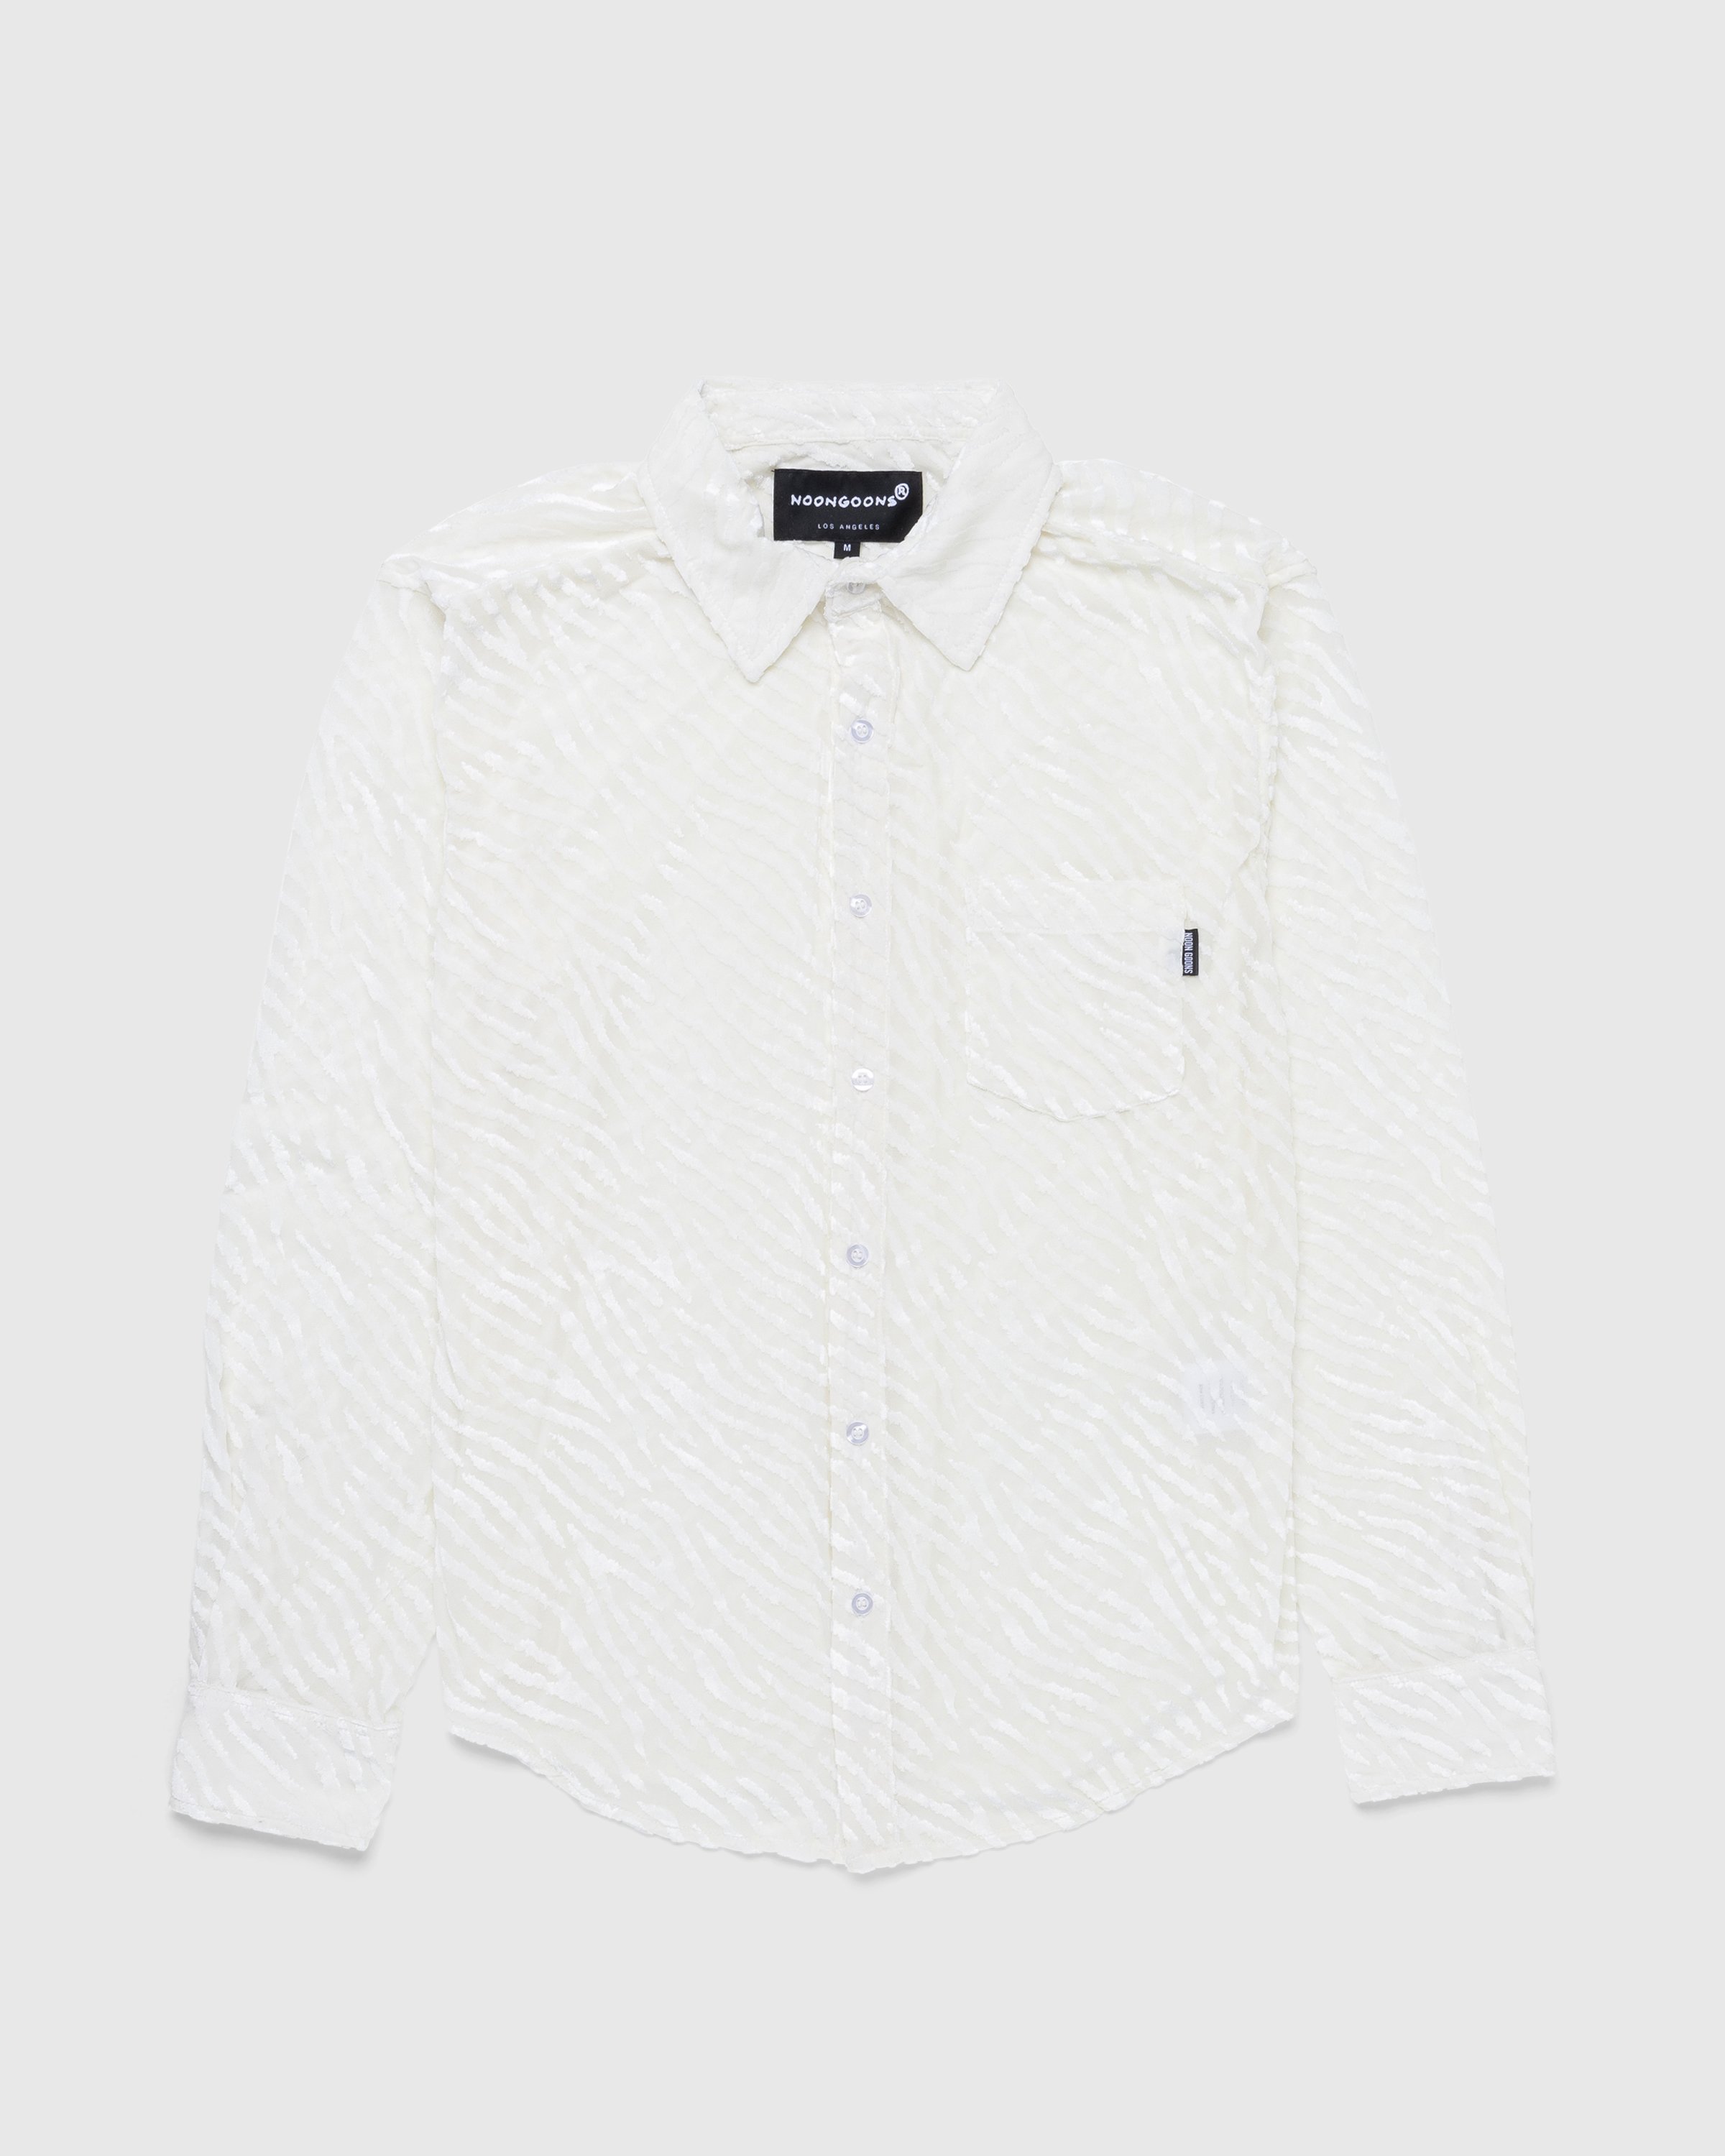 Noon Goons - Tijuana Tiger Shirt White - Clothing - White - Image 1